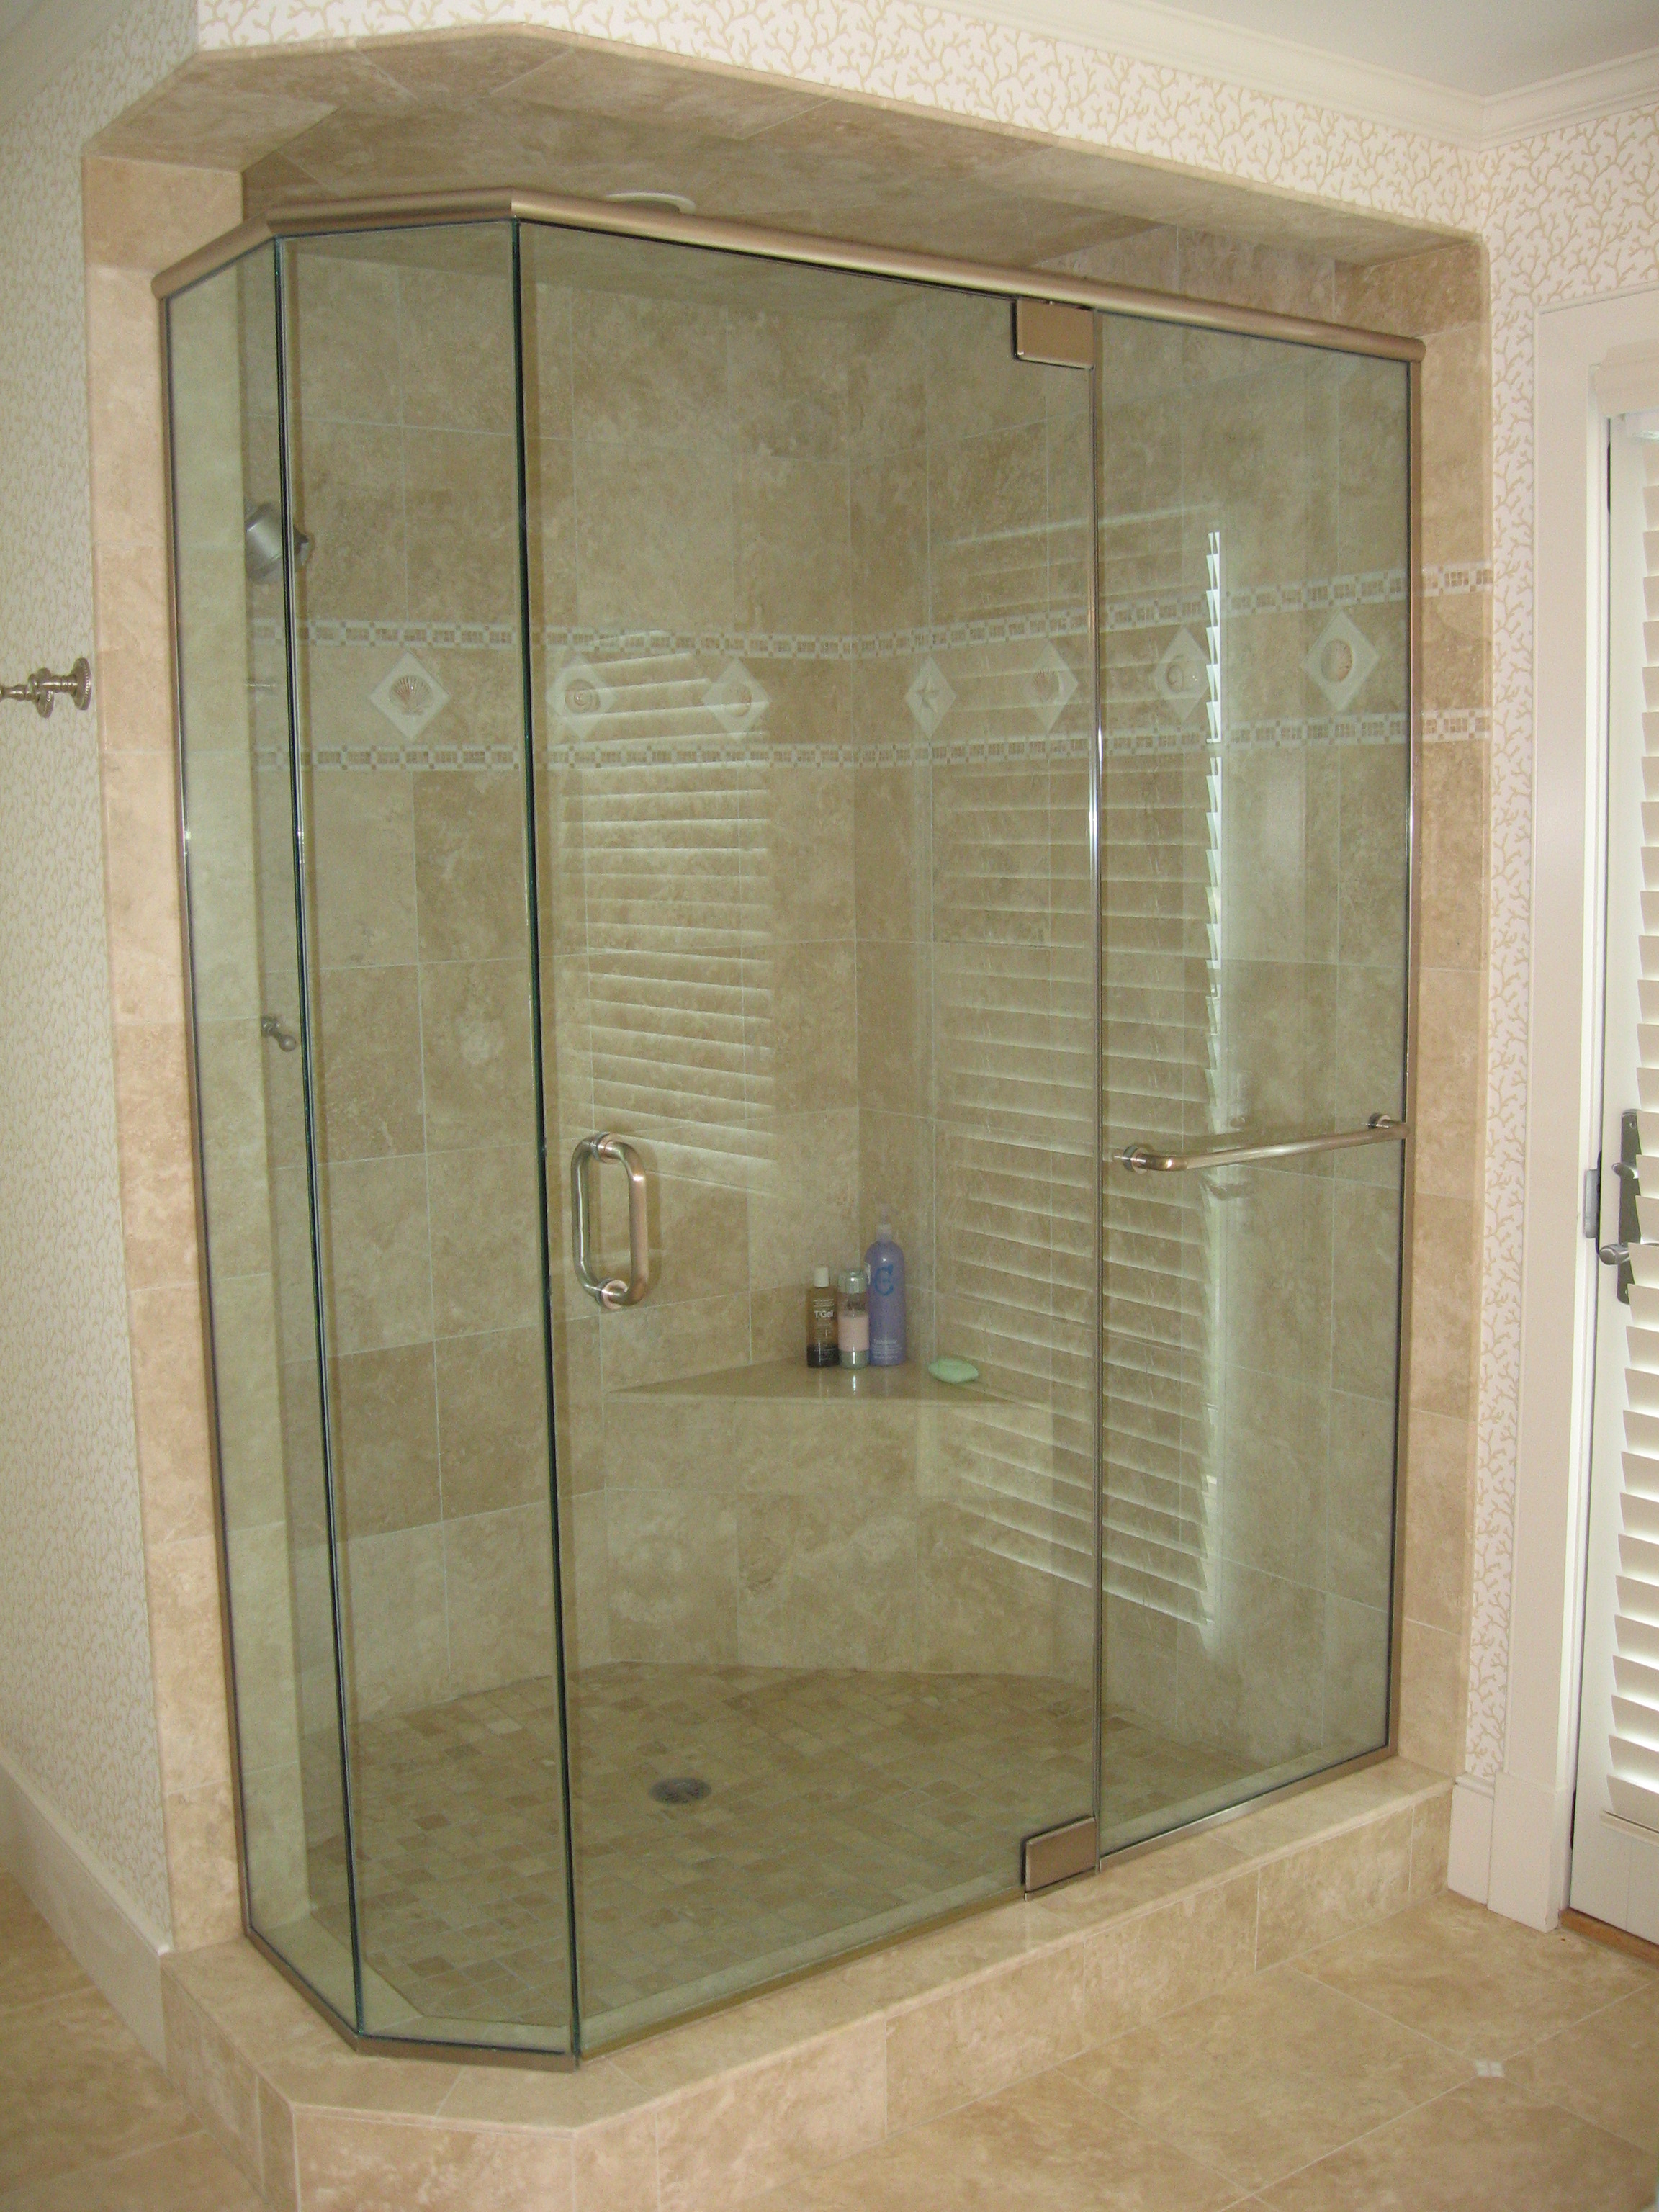 Modren Bathroom Tile Ideas Natural Area With Shower Also